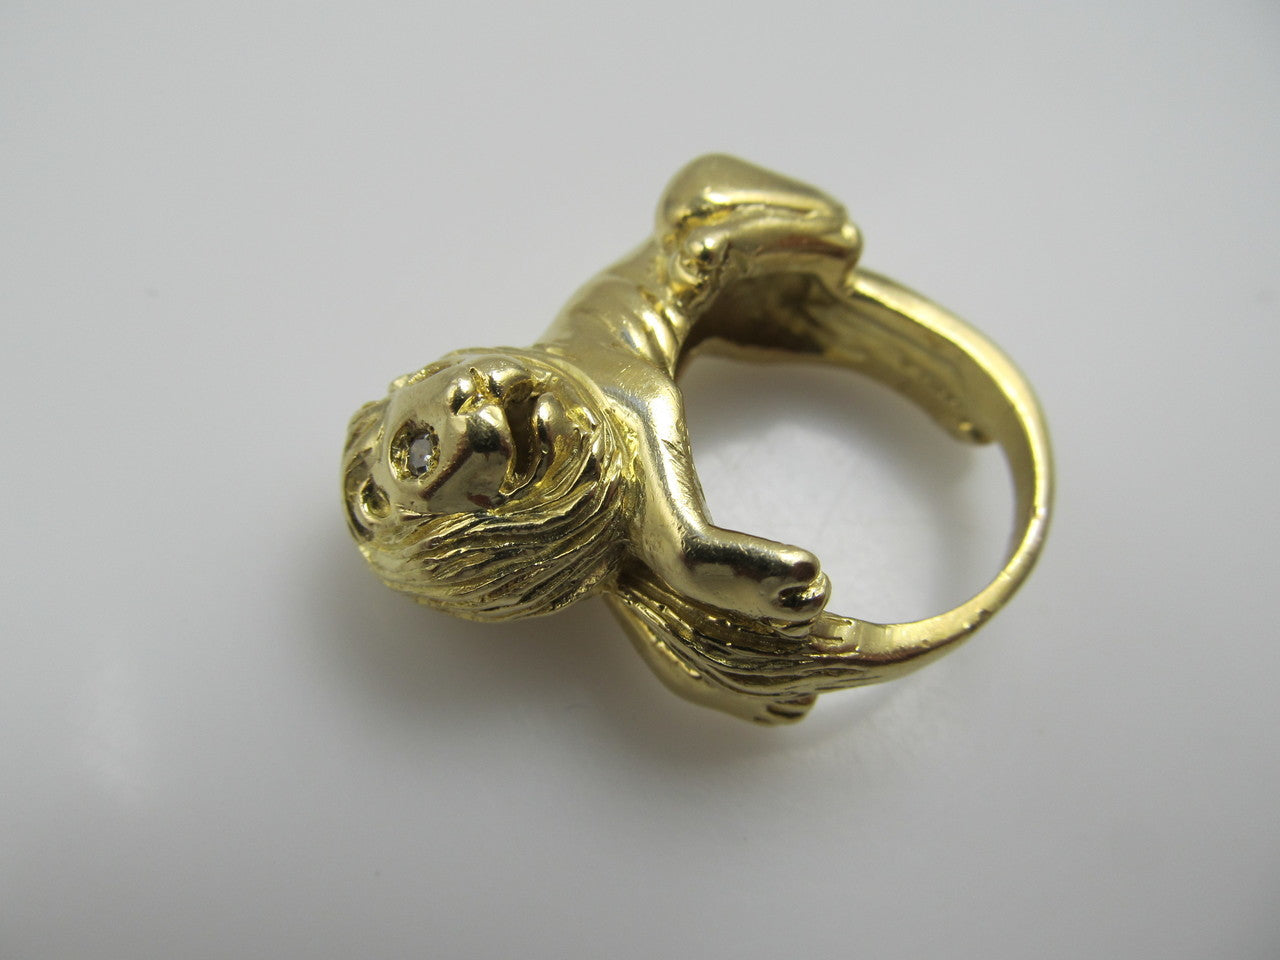 Heavy Vintage 18k Yellow Gold Lion Ring With Diamond Eyes, Circa 1960